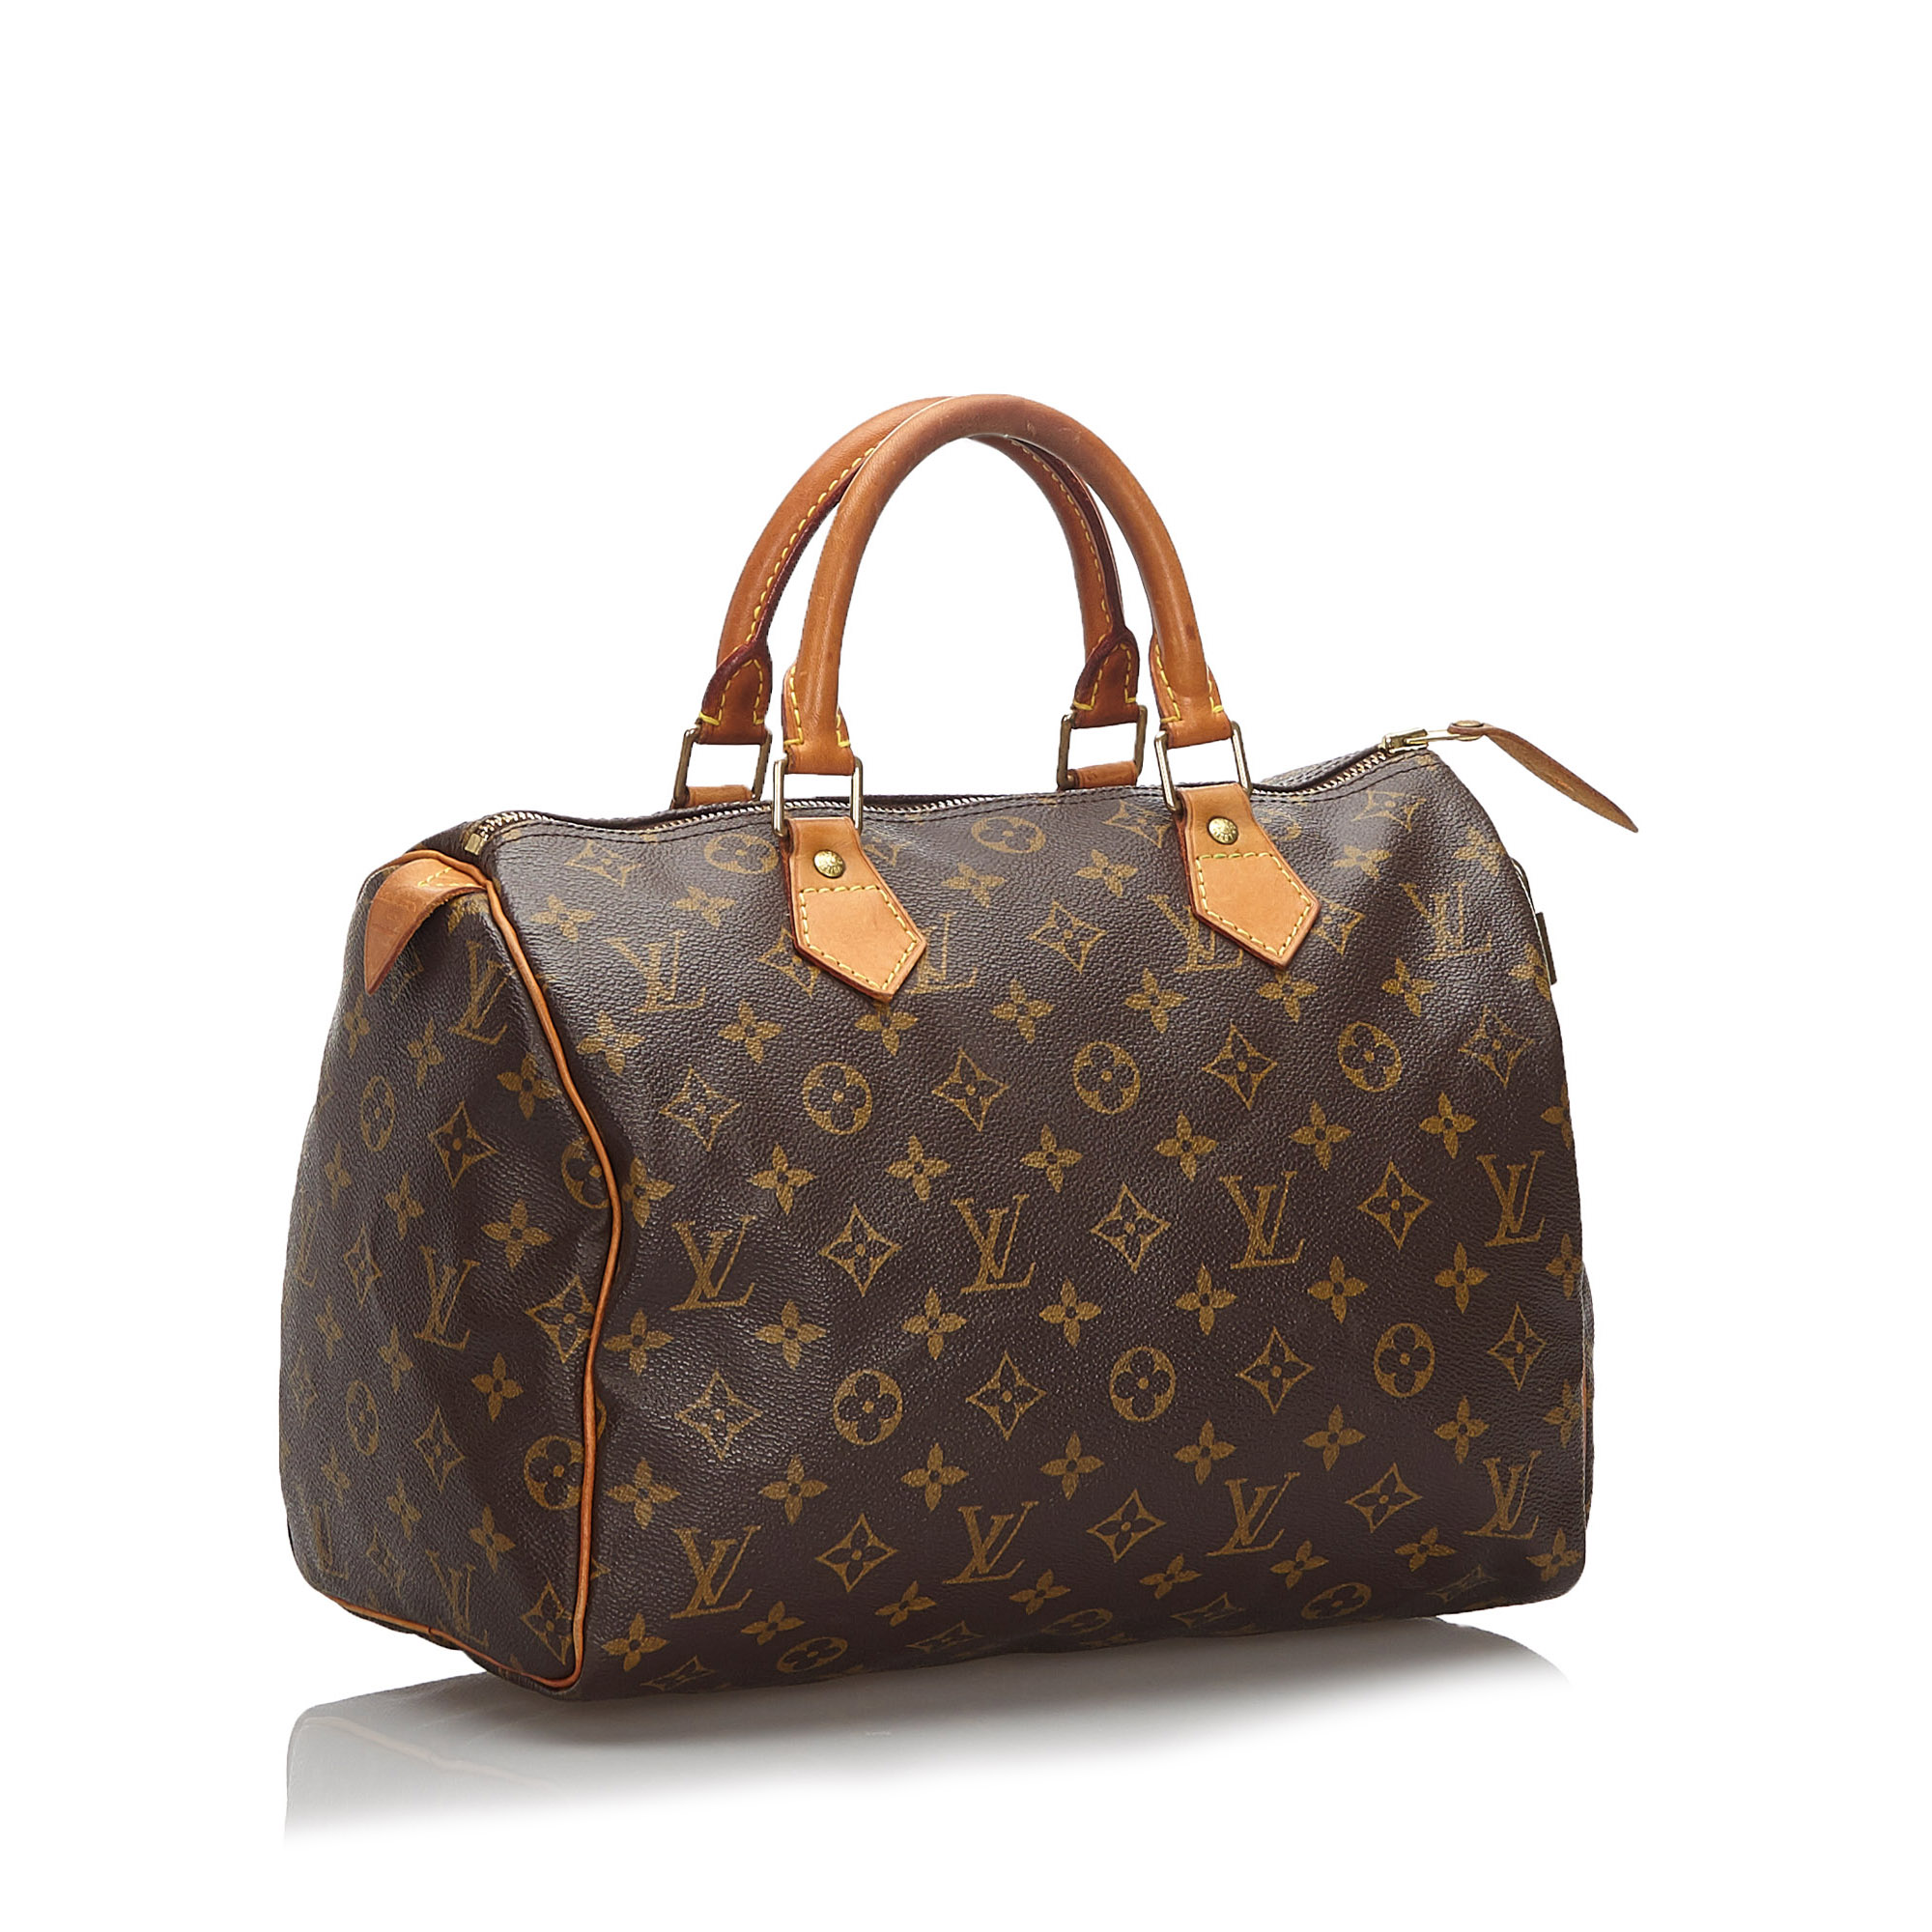 Louis Vuitton Monogram Speedy 30 Bag - Image 4 of 9